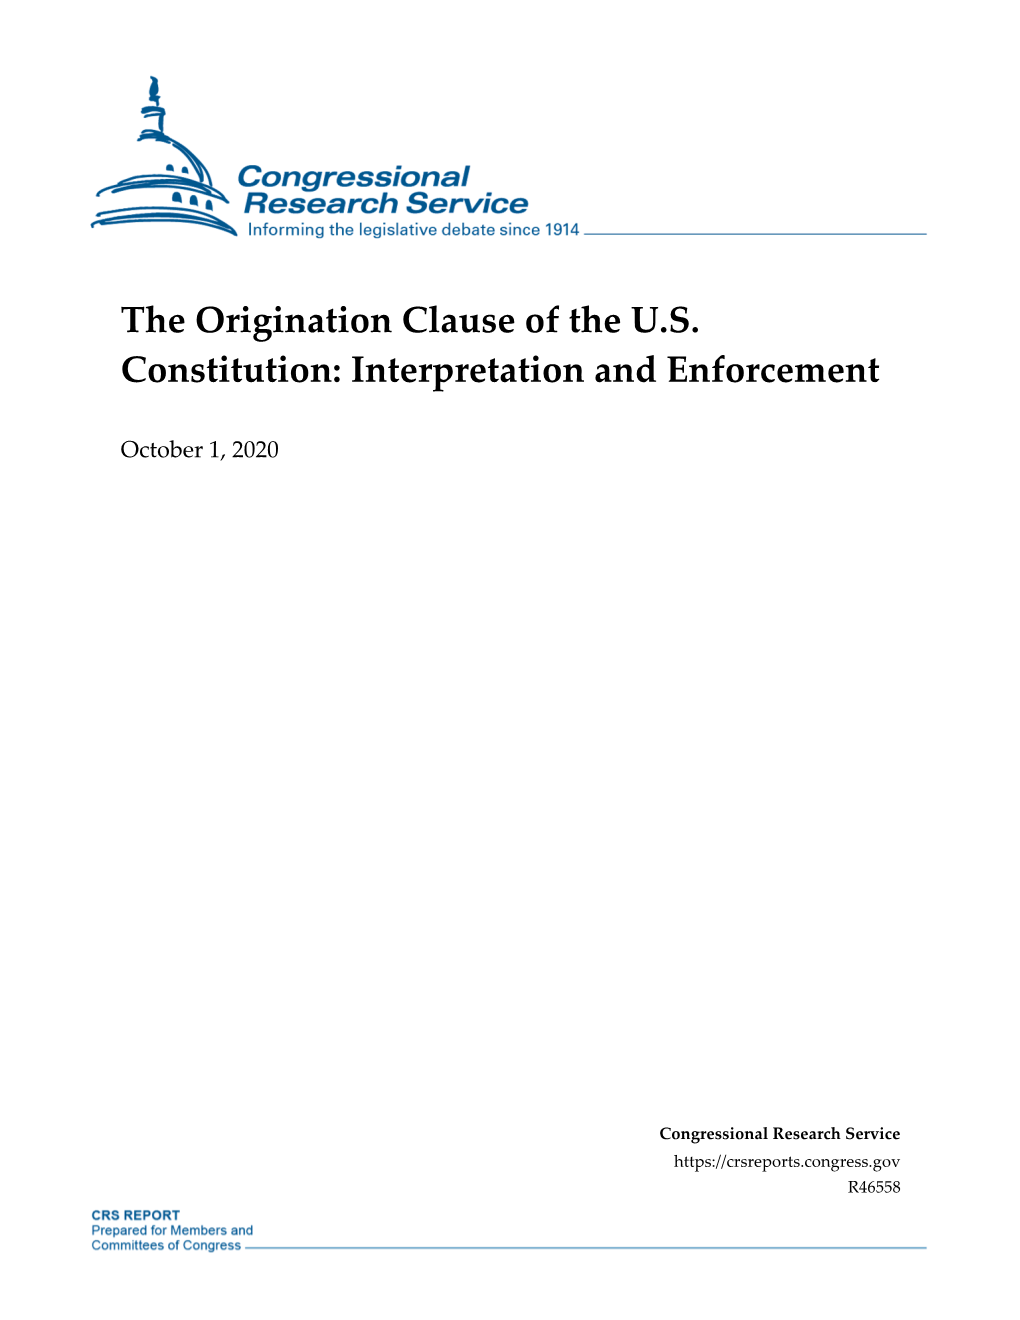 The Origination Clause of the U.S. Constitution: Interpretation and Enforcement